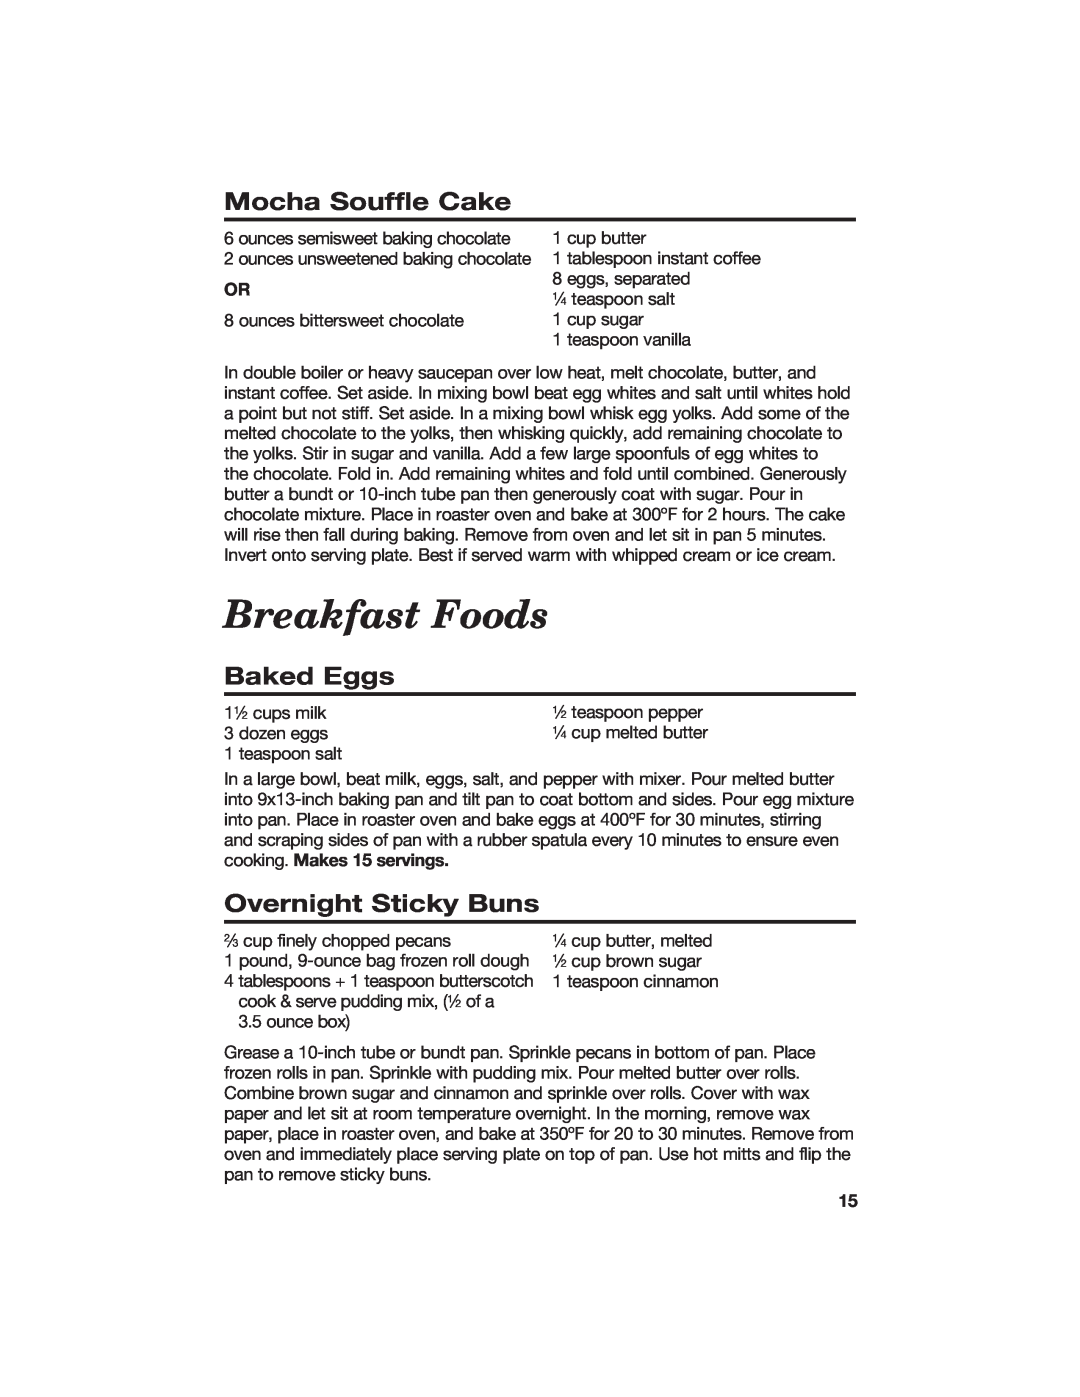 Hamilton Beach Roaster Oven manual Breakfast Foods, Mocha Souffle Cake, Baked Eggs, Overnight Sticky Buns 